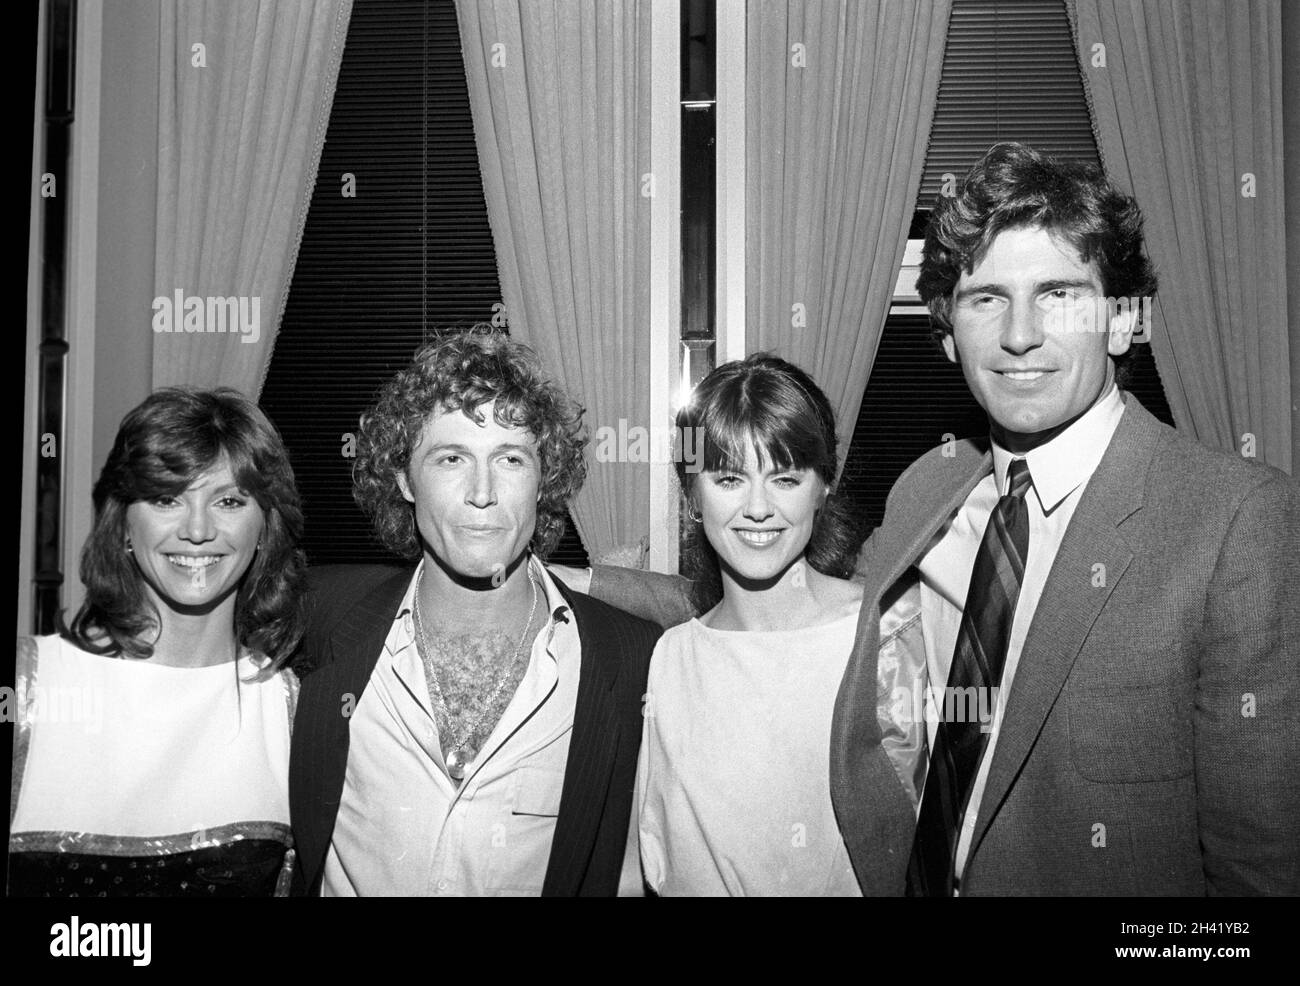 Victoria Principal, Andy Gibb and Pam Dawber Circa 1980's Credit: Ralph Dominguez/MediaPunch Stock Photo